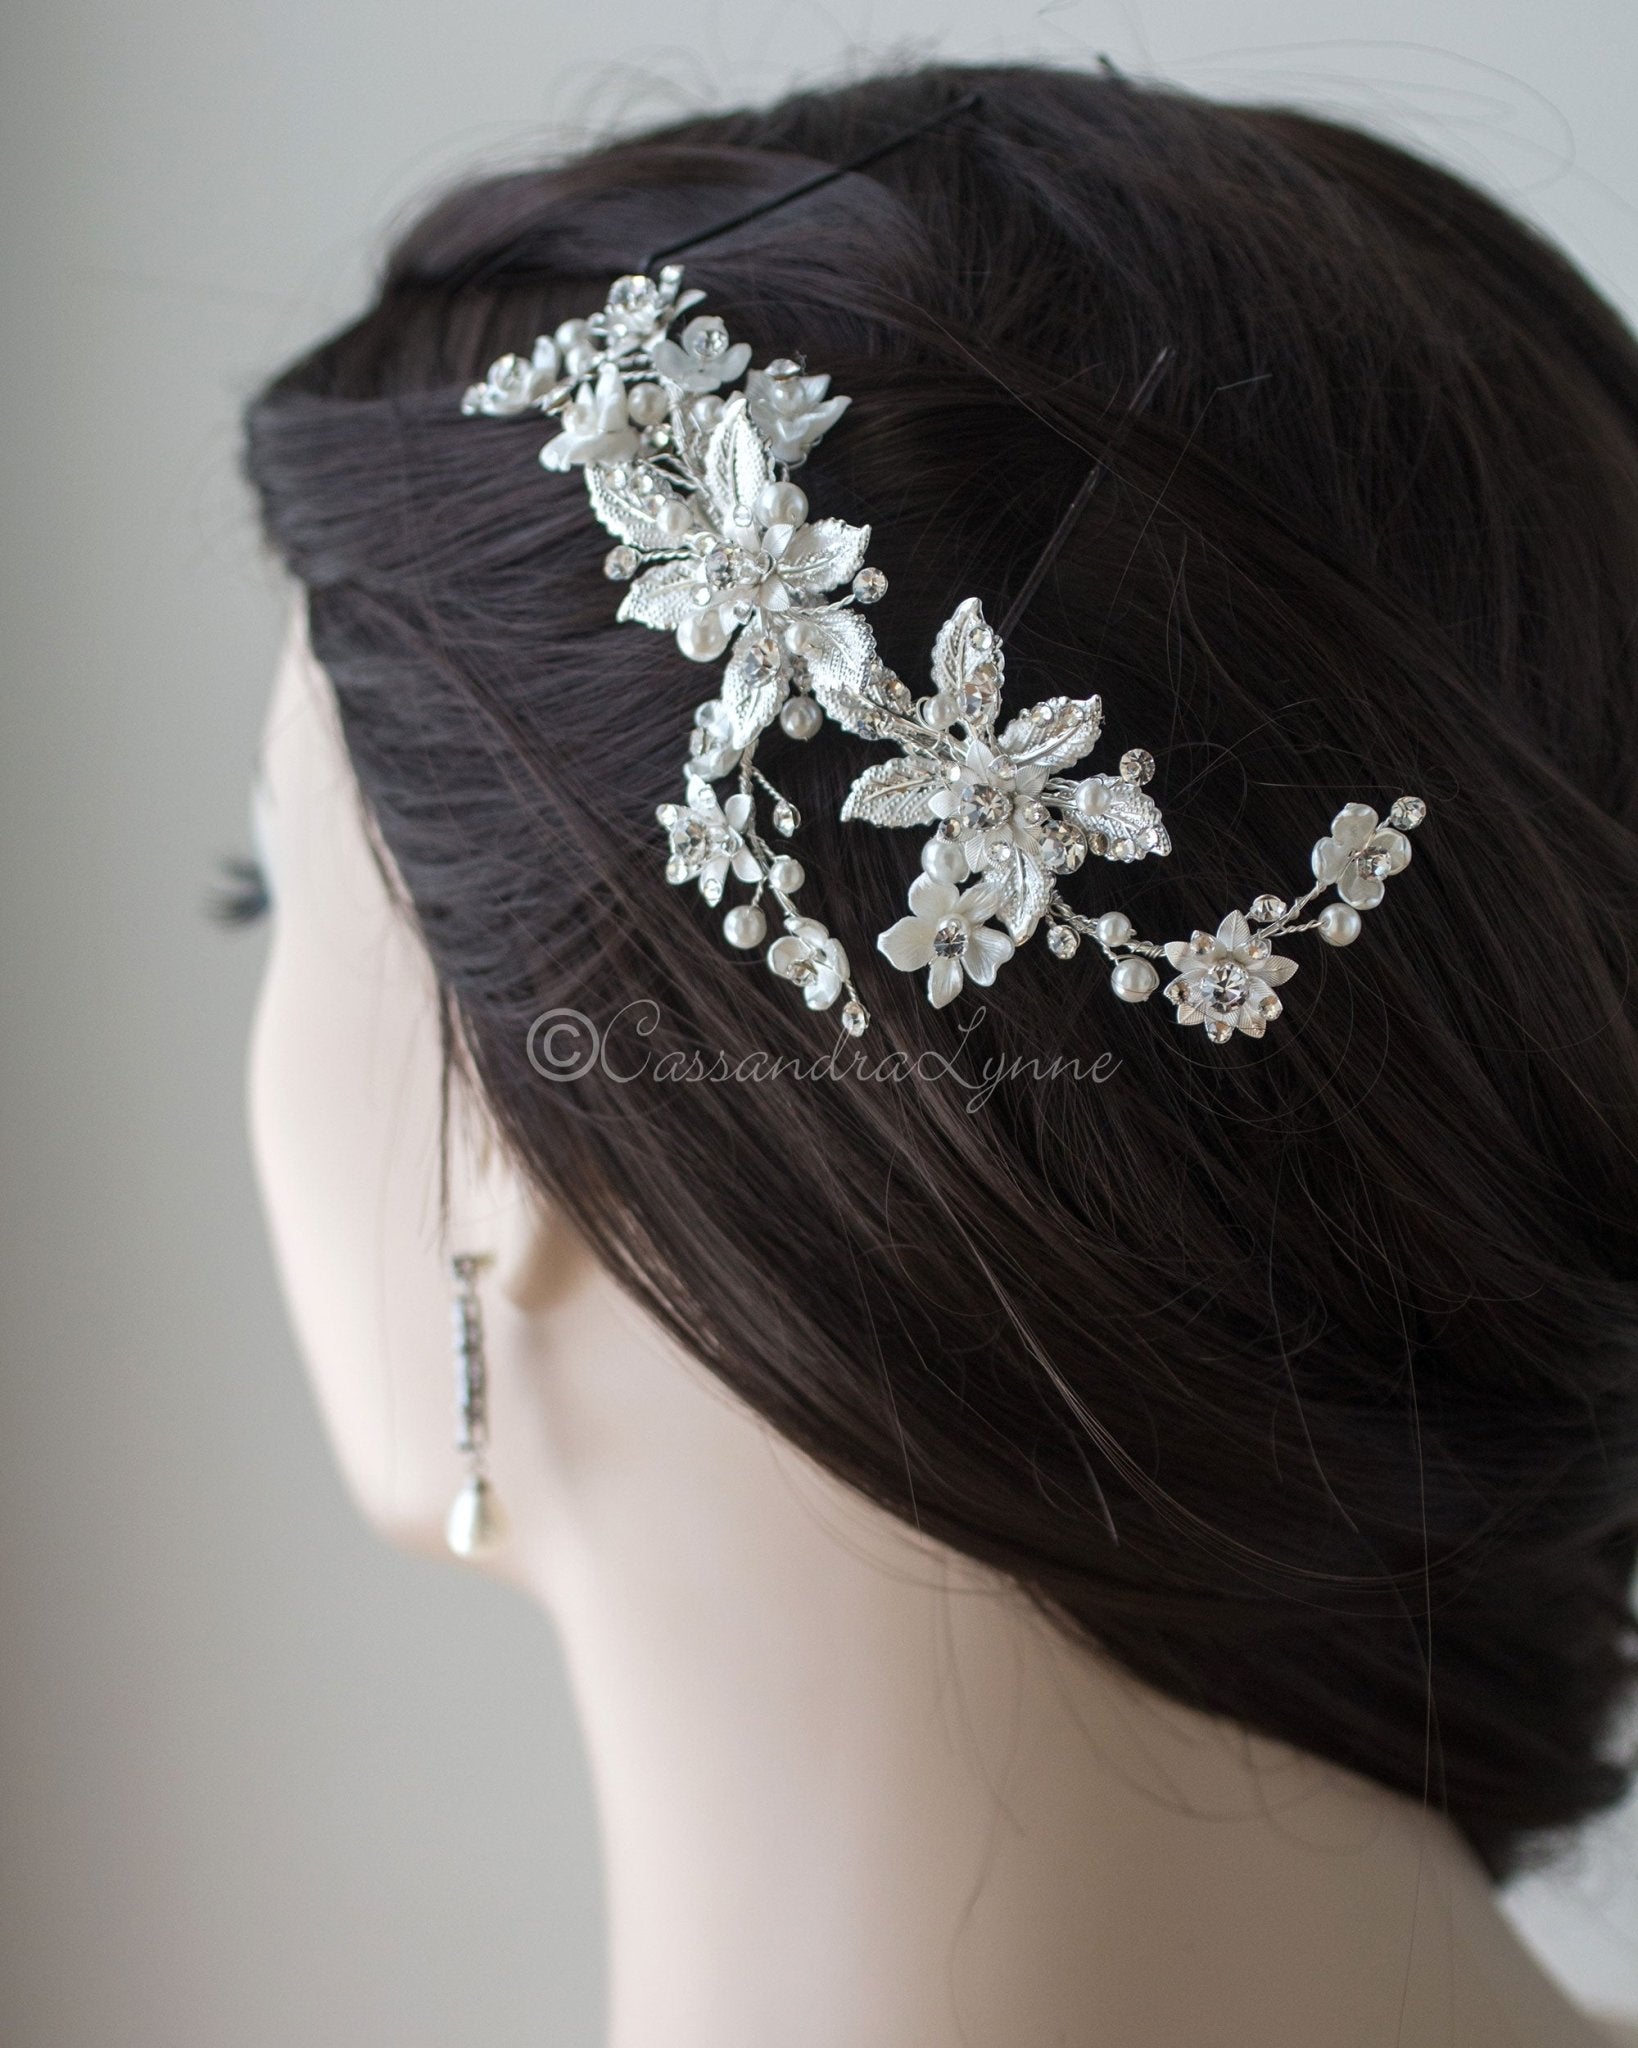 Wedding Hair Clip of Leaves and Porcelain Flowers - Cassandra Lynne